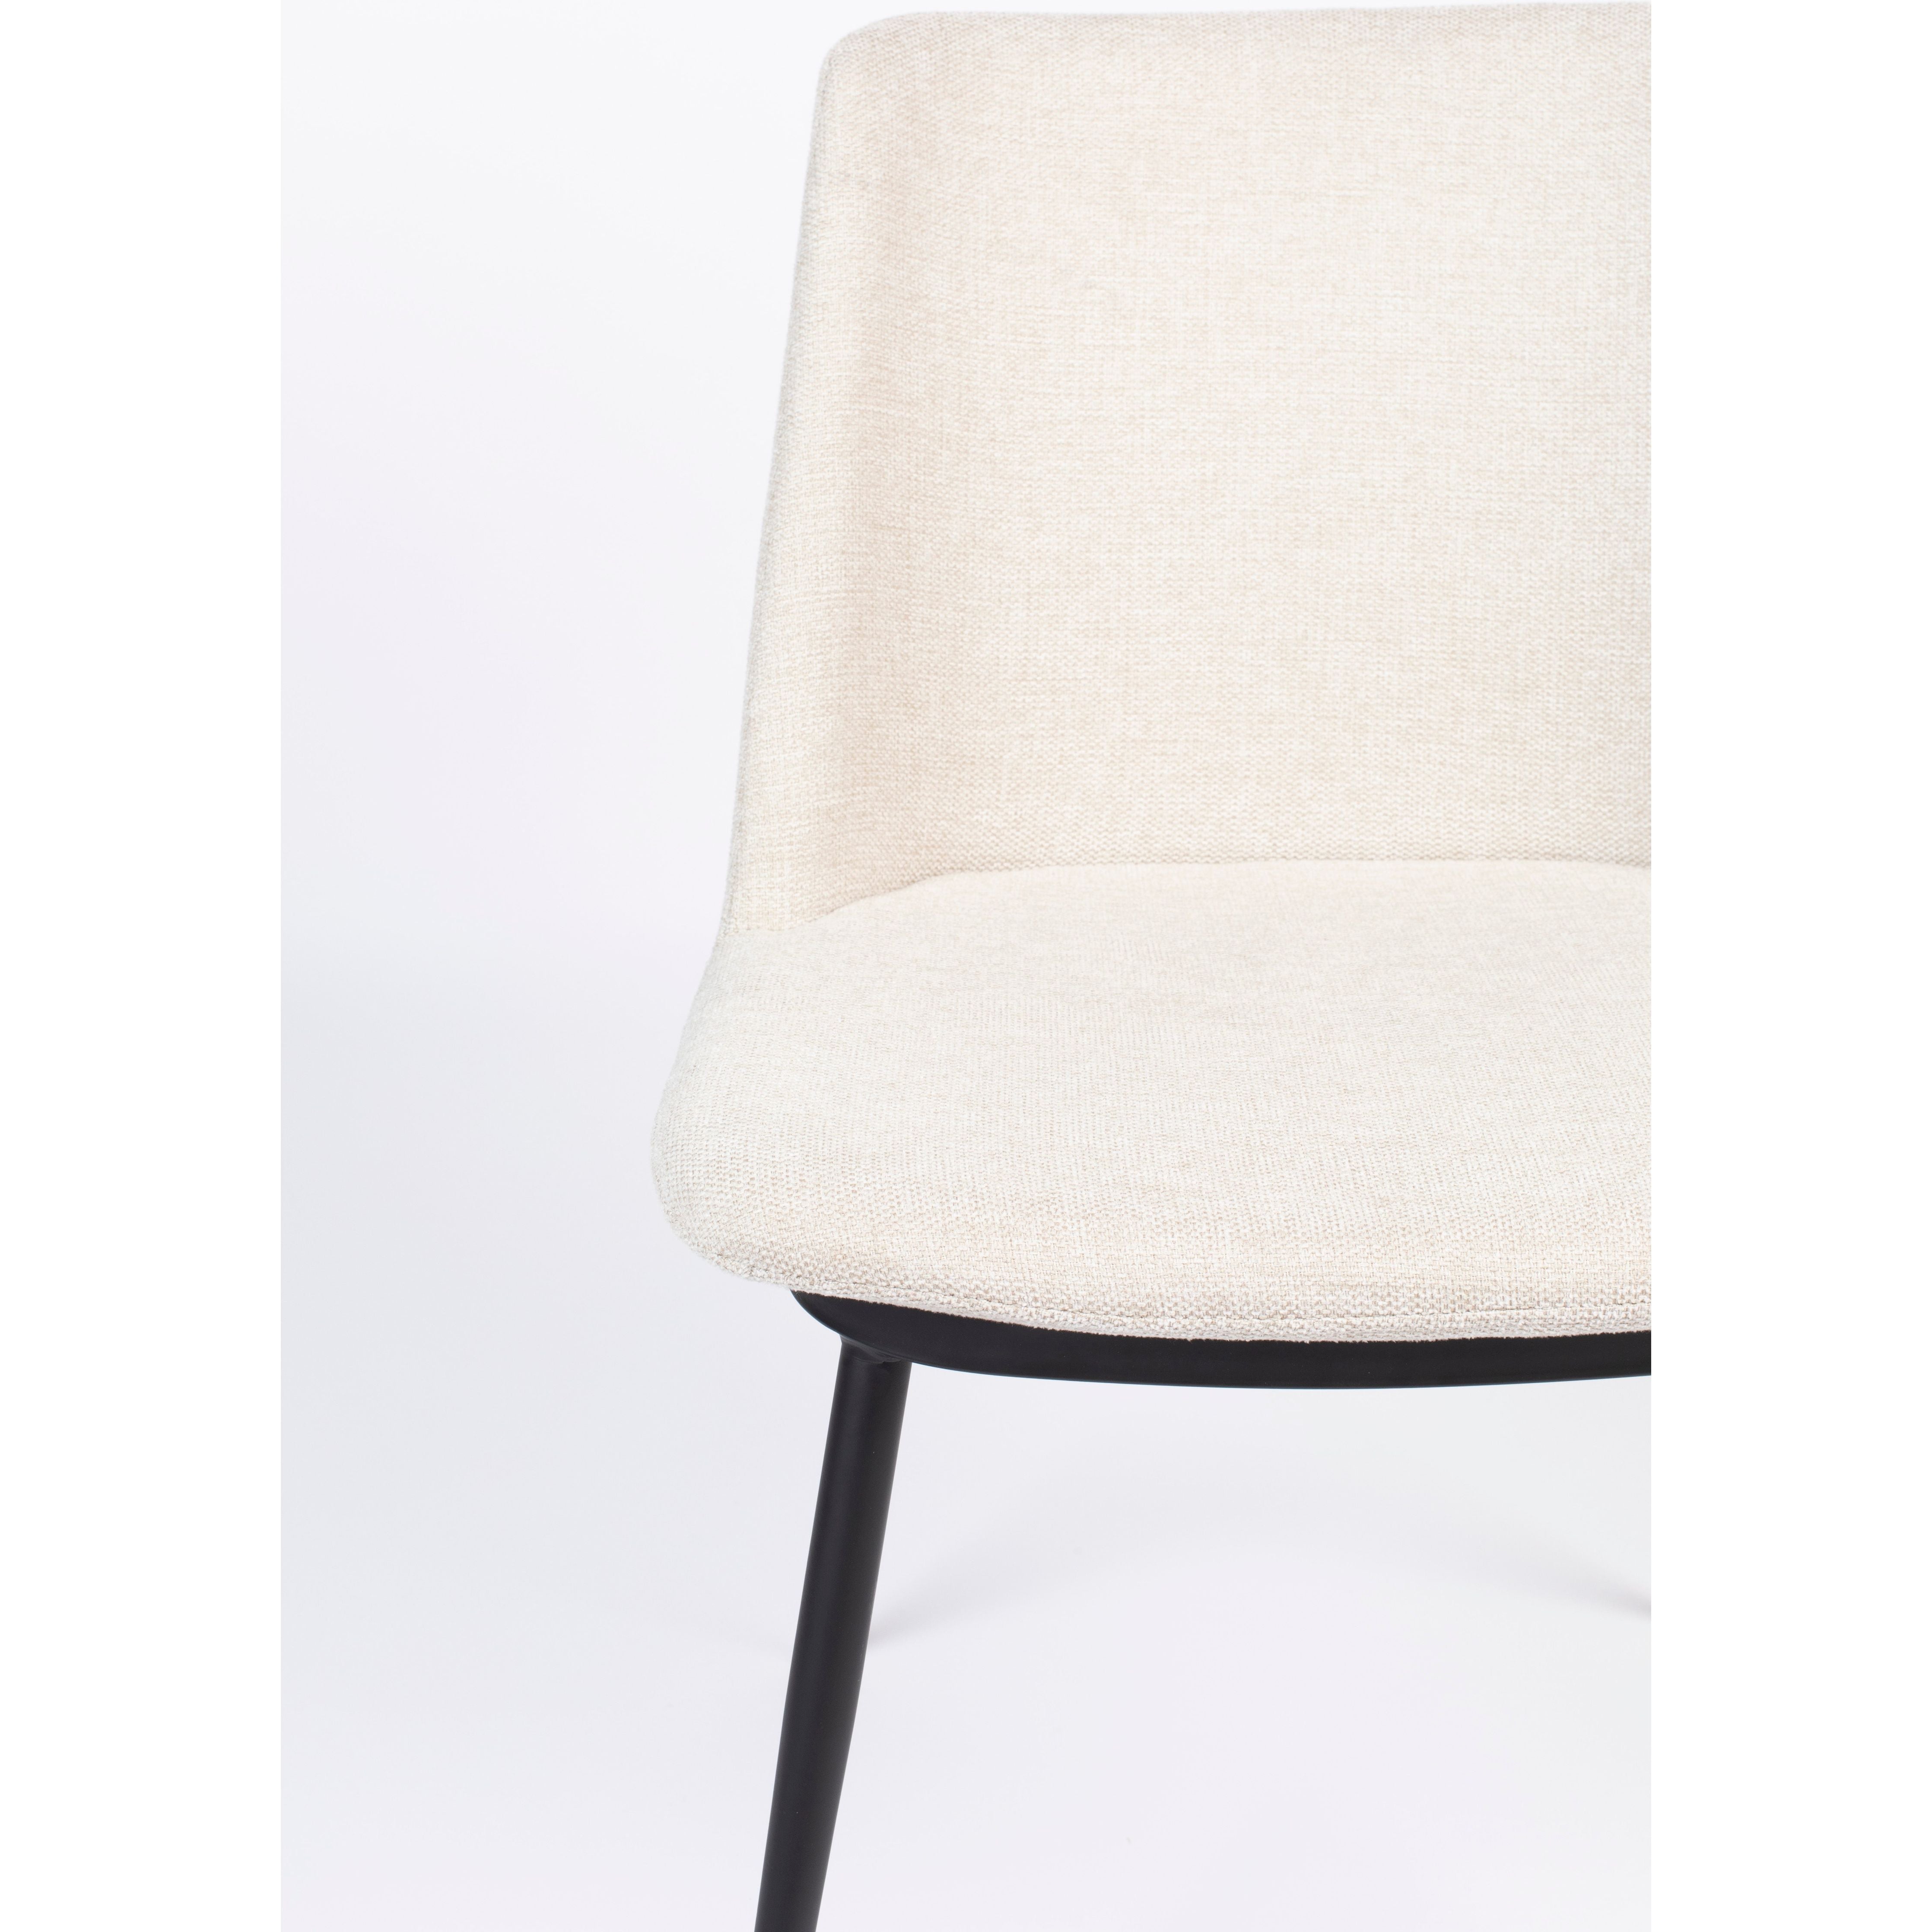 Chair lionel beige fr | 2 pieces